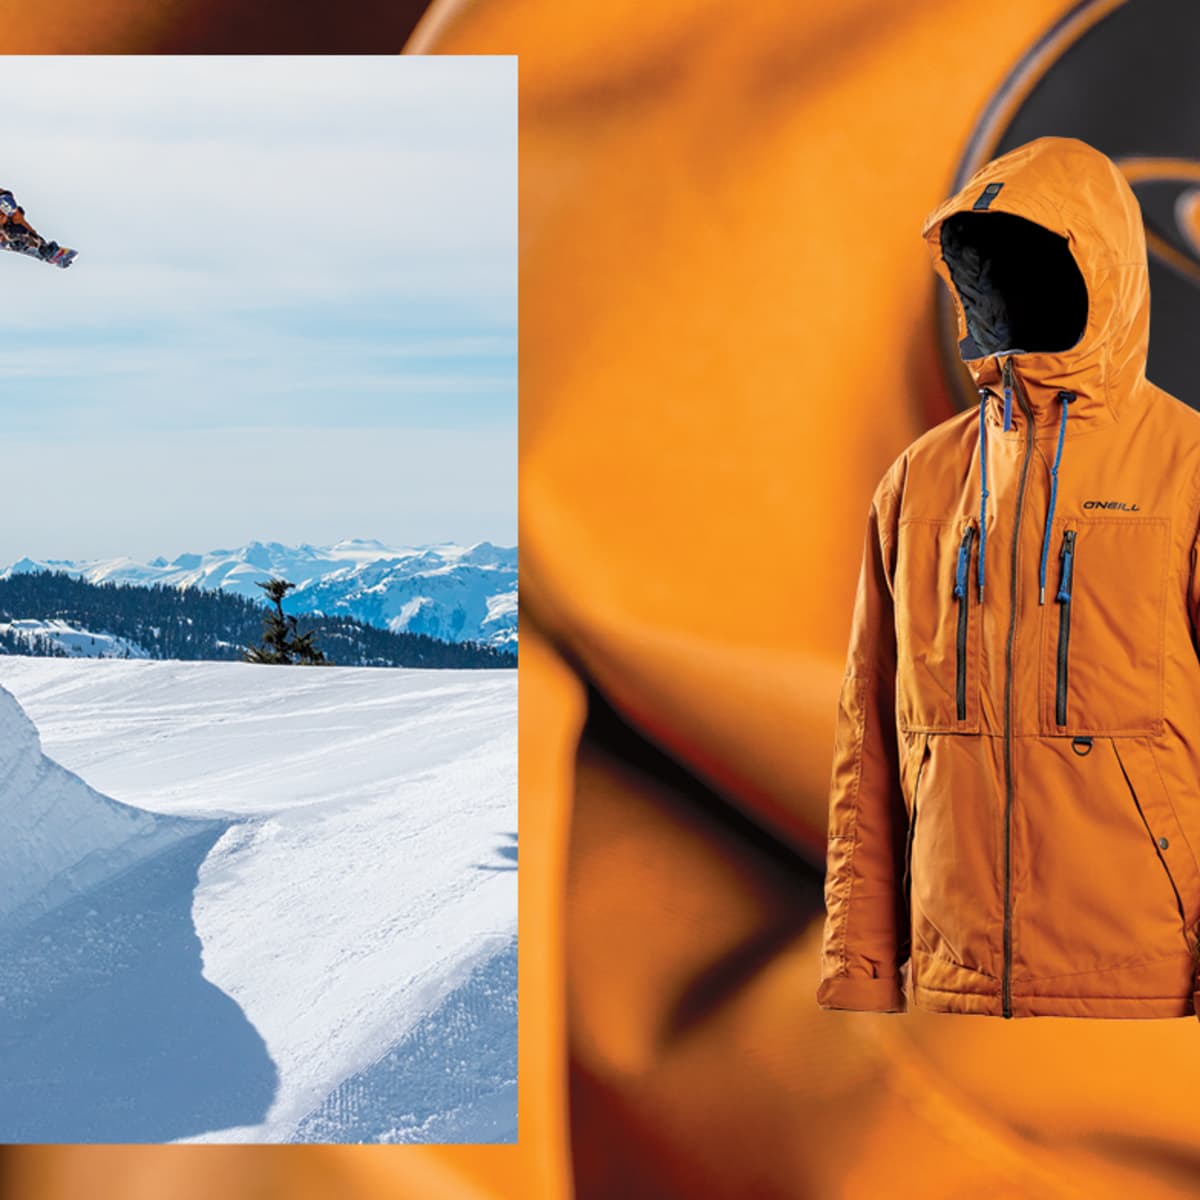 O'Neill Hybrid Seb Toots Terrain Jacket: Snowboarding Gear